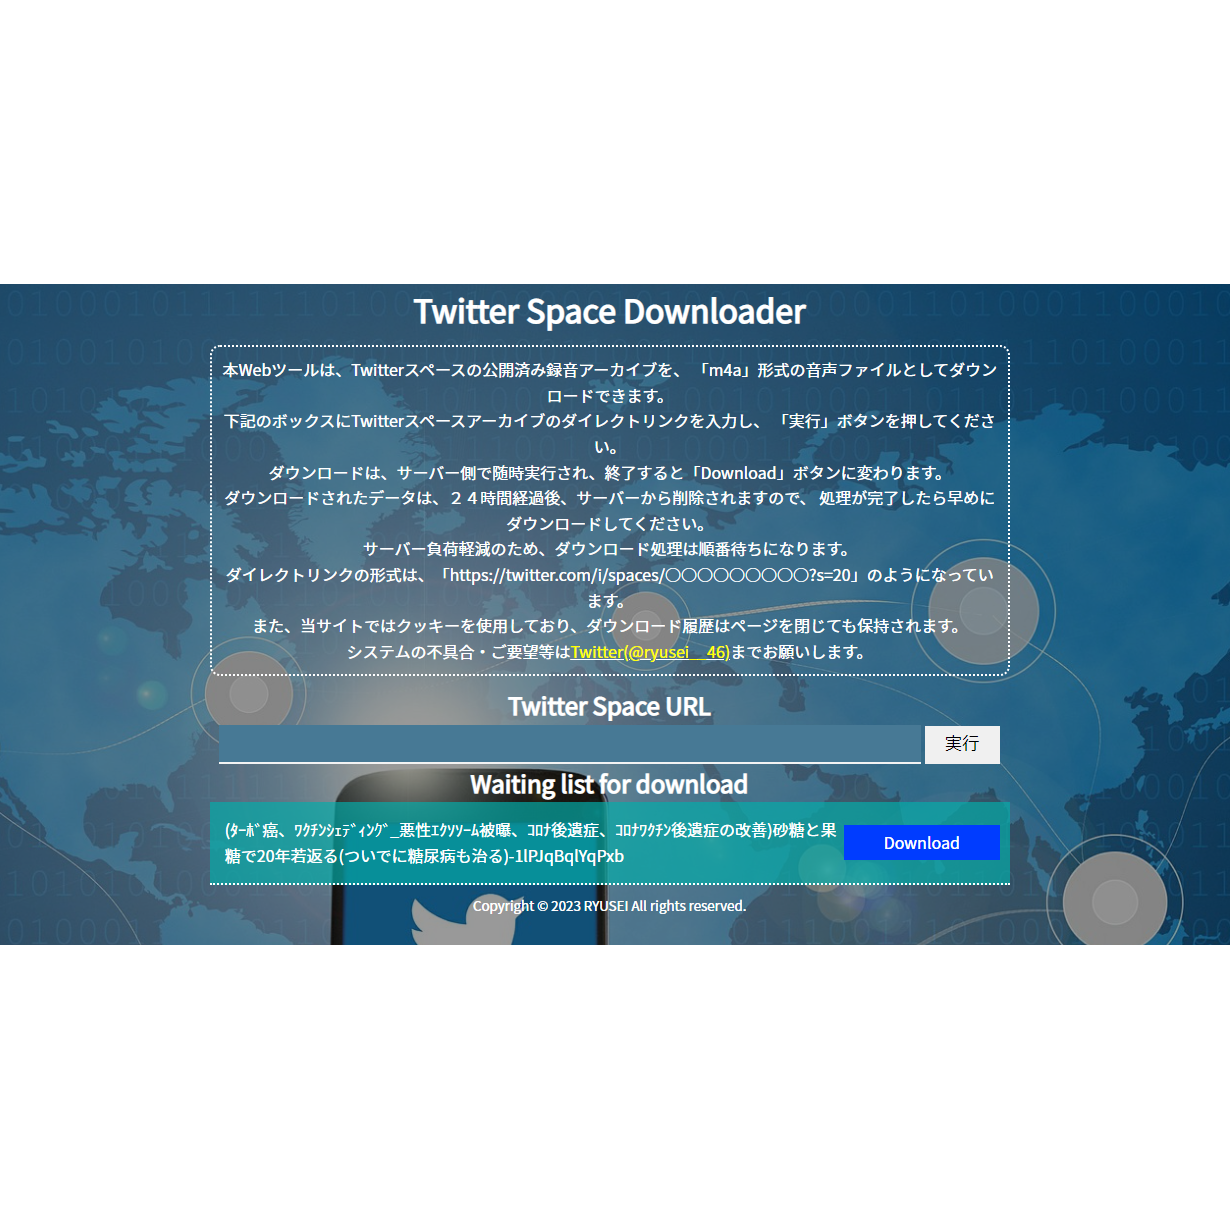 Twitter Space Downloader